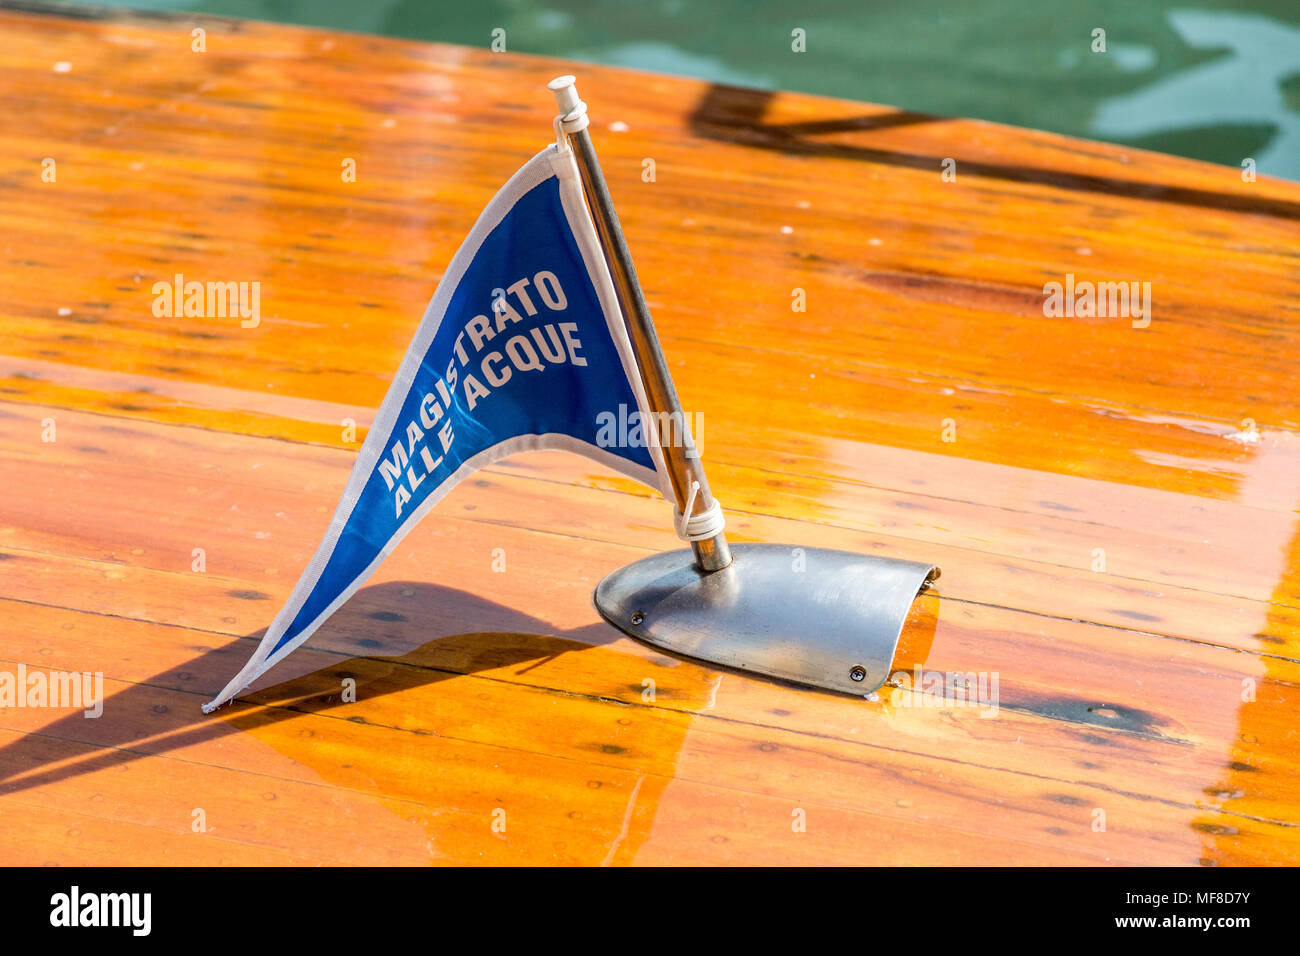 Venedig, Italien - 28. Februar 2015: Magistrato Alle Acque bedeutet wörtlich Magistrat am Wasser. Ihr Boot vertäut am Grand Canal in Venedig, Italien. Stockfoto